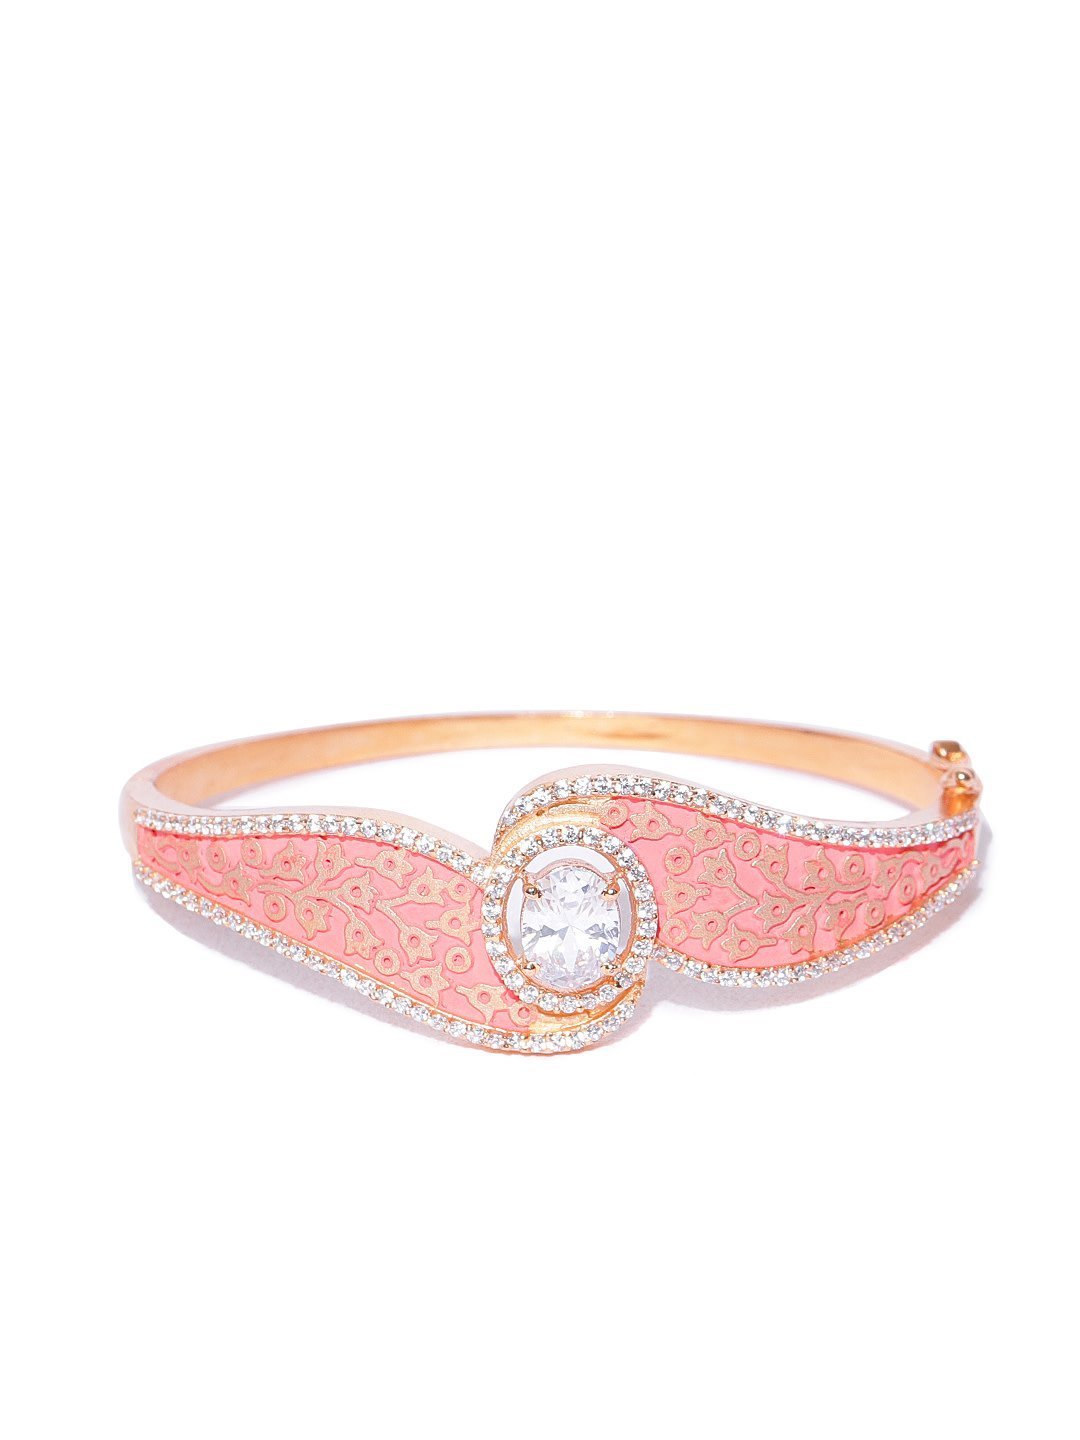 Women's Gold-Plated American Diamond Studded, Meenakari Bracelet in Peach Color - Priyaasi